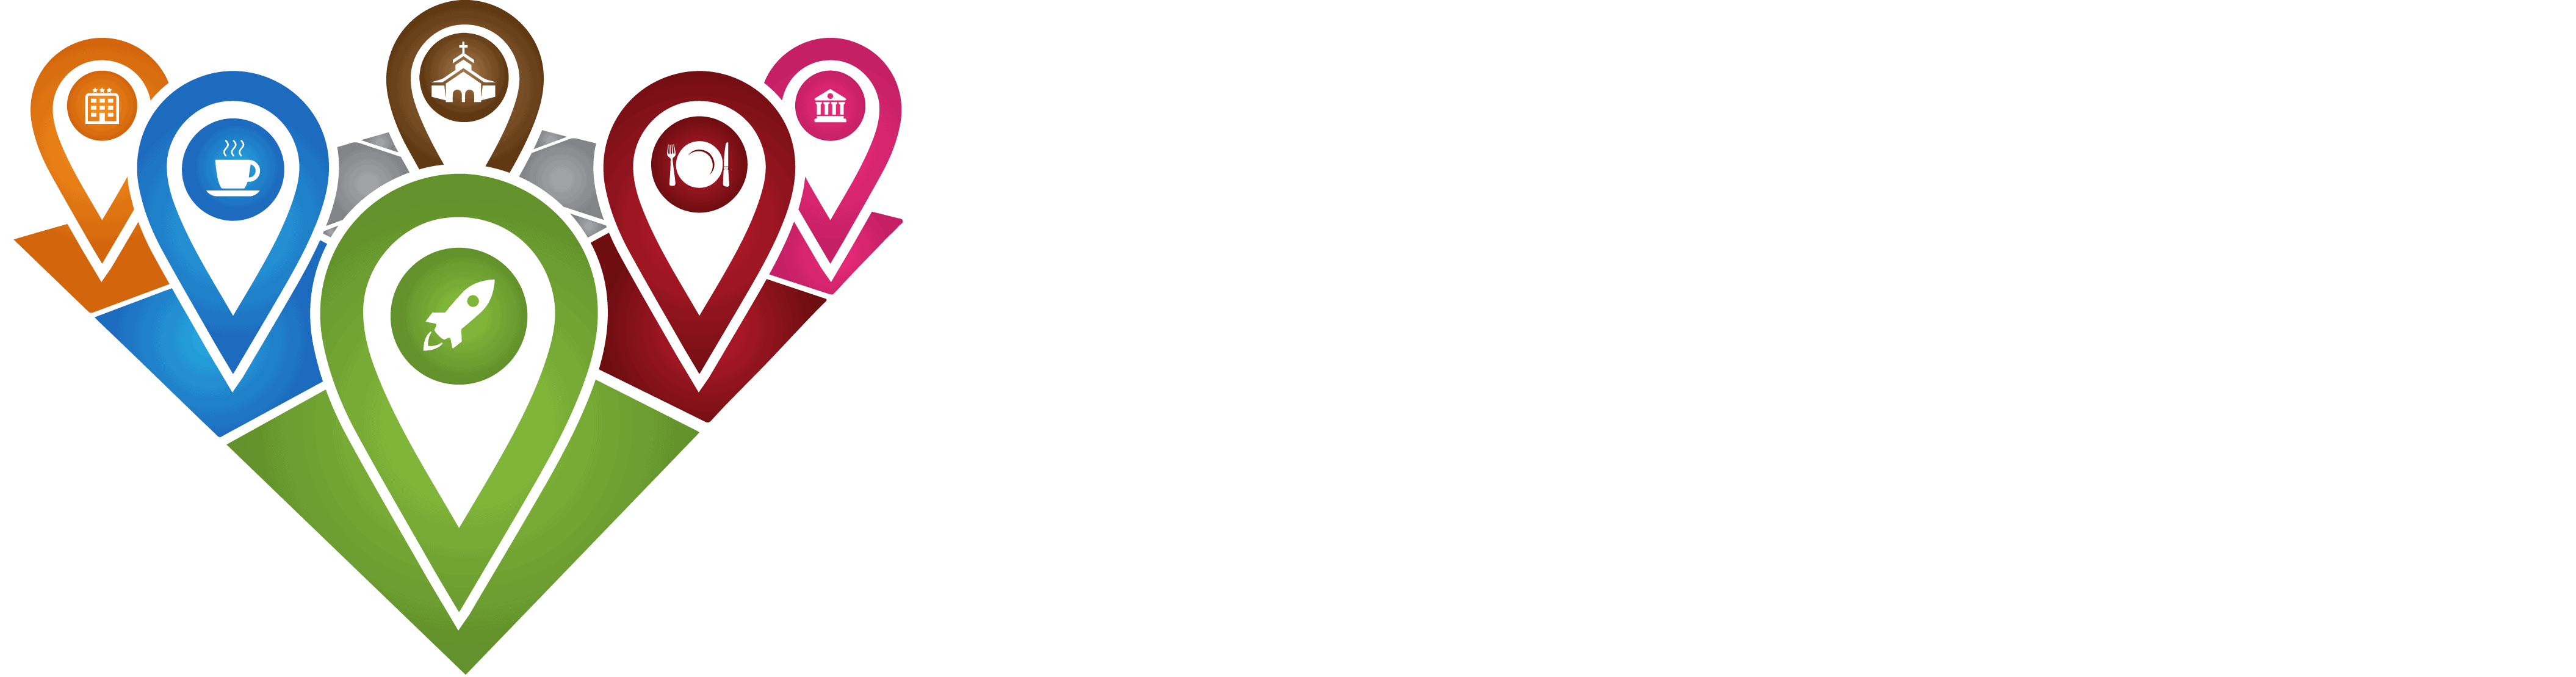 Cropped Top Ten Dublin Logo White 2.png